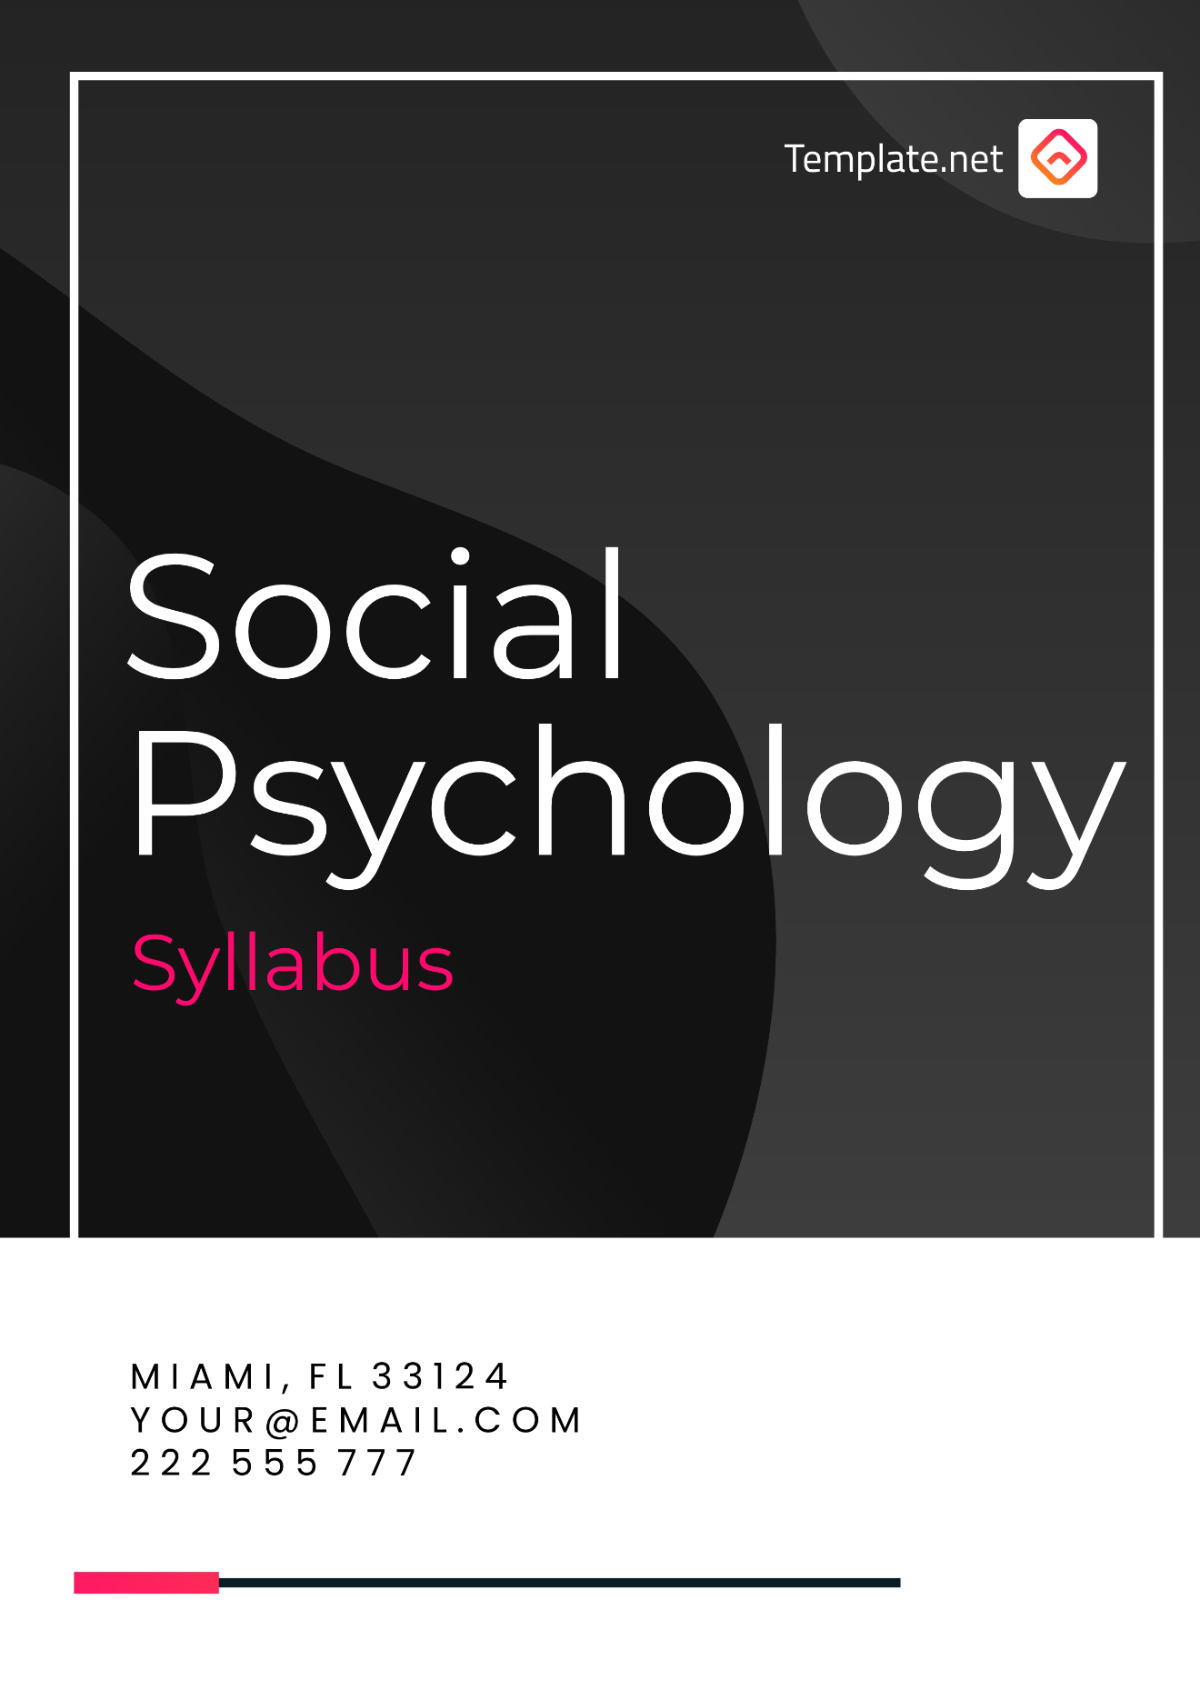 Social Psychology Syllabus Template